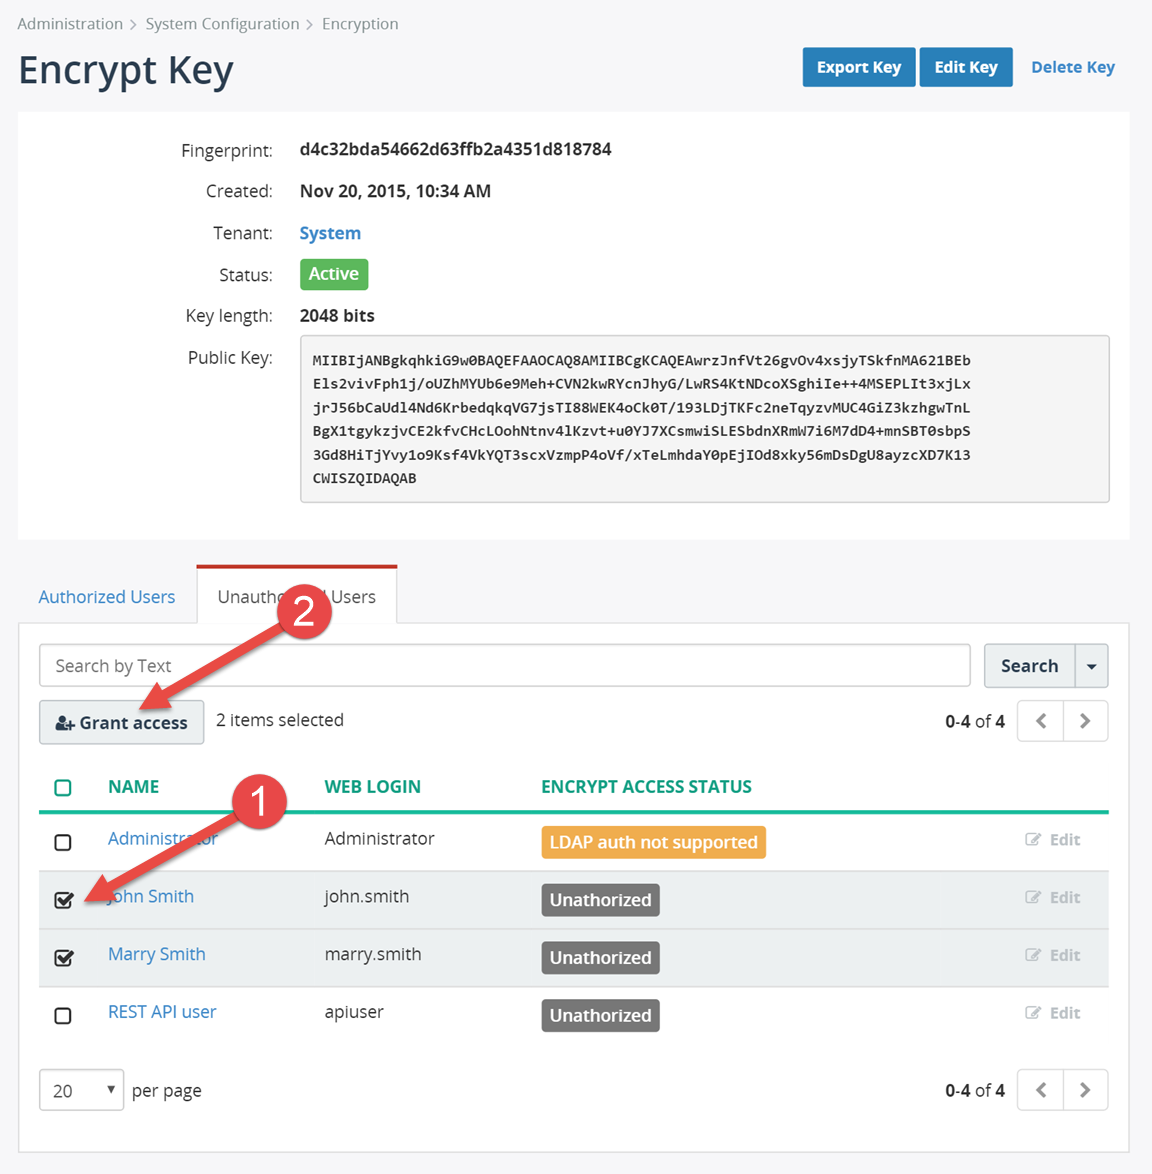 Grant access to encryption key